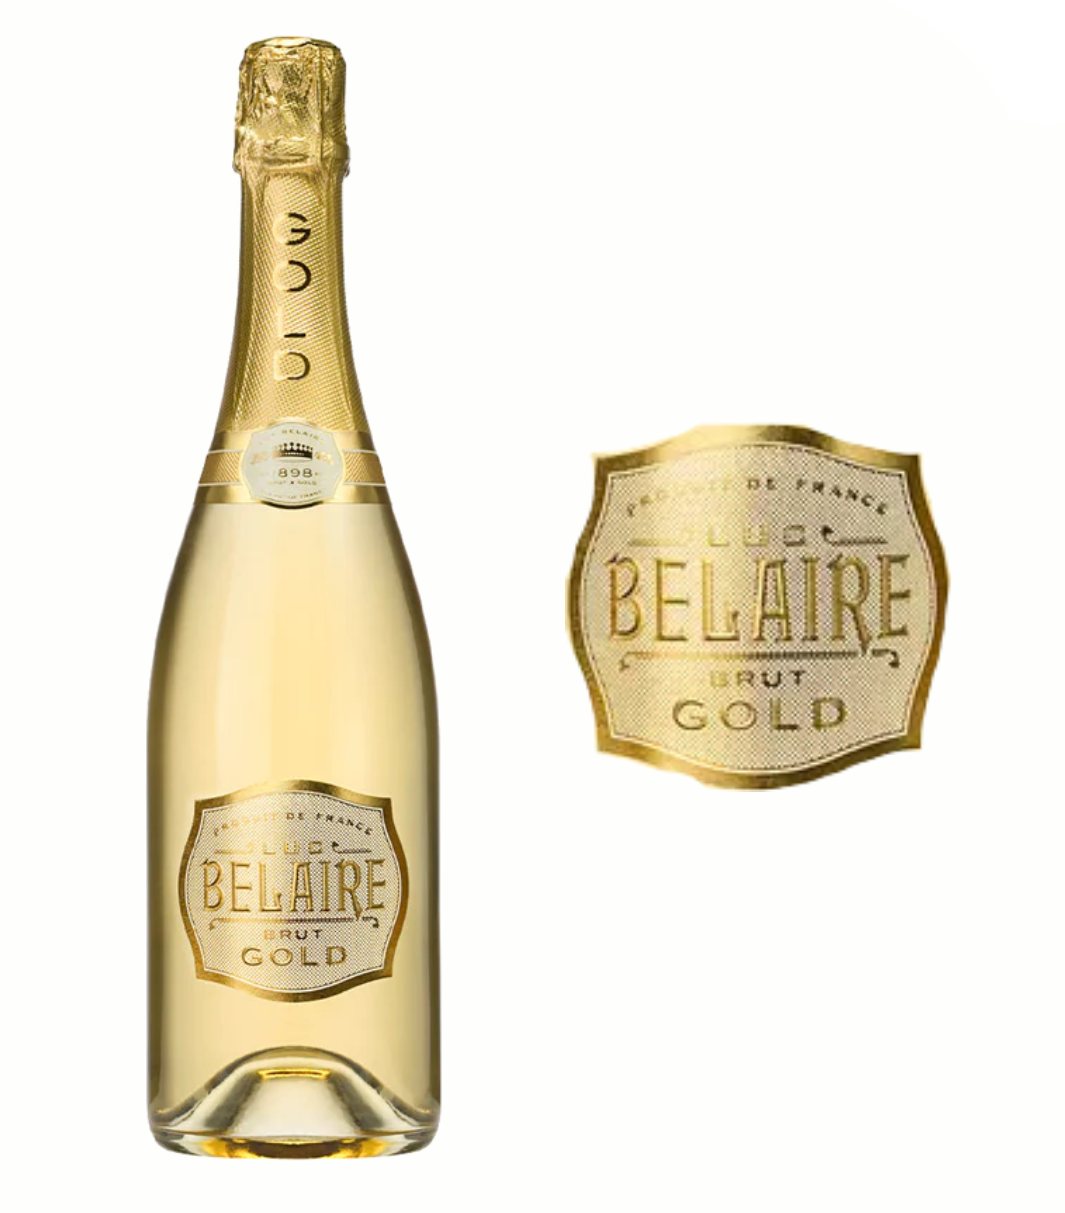 Luc Belaire Gold Brut Champagne, 750 mL - Harris Teeter